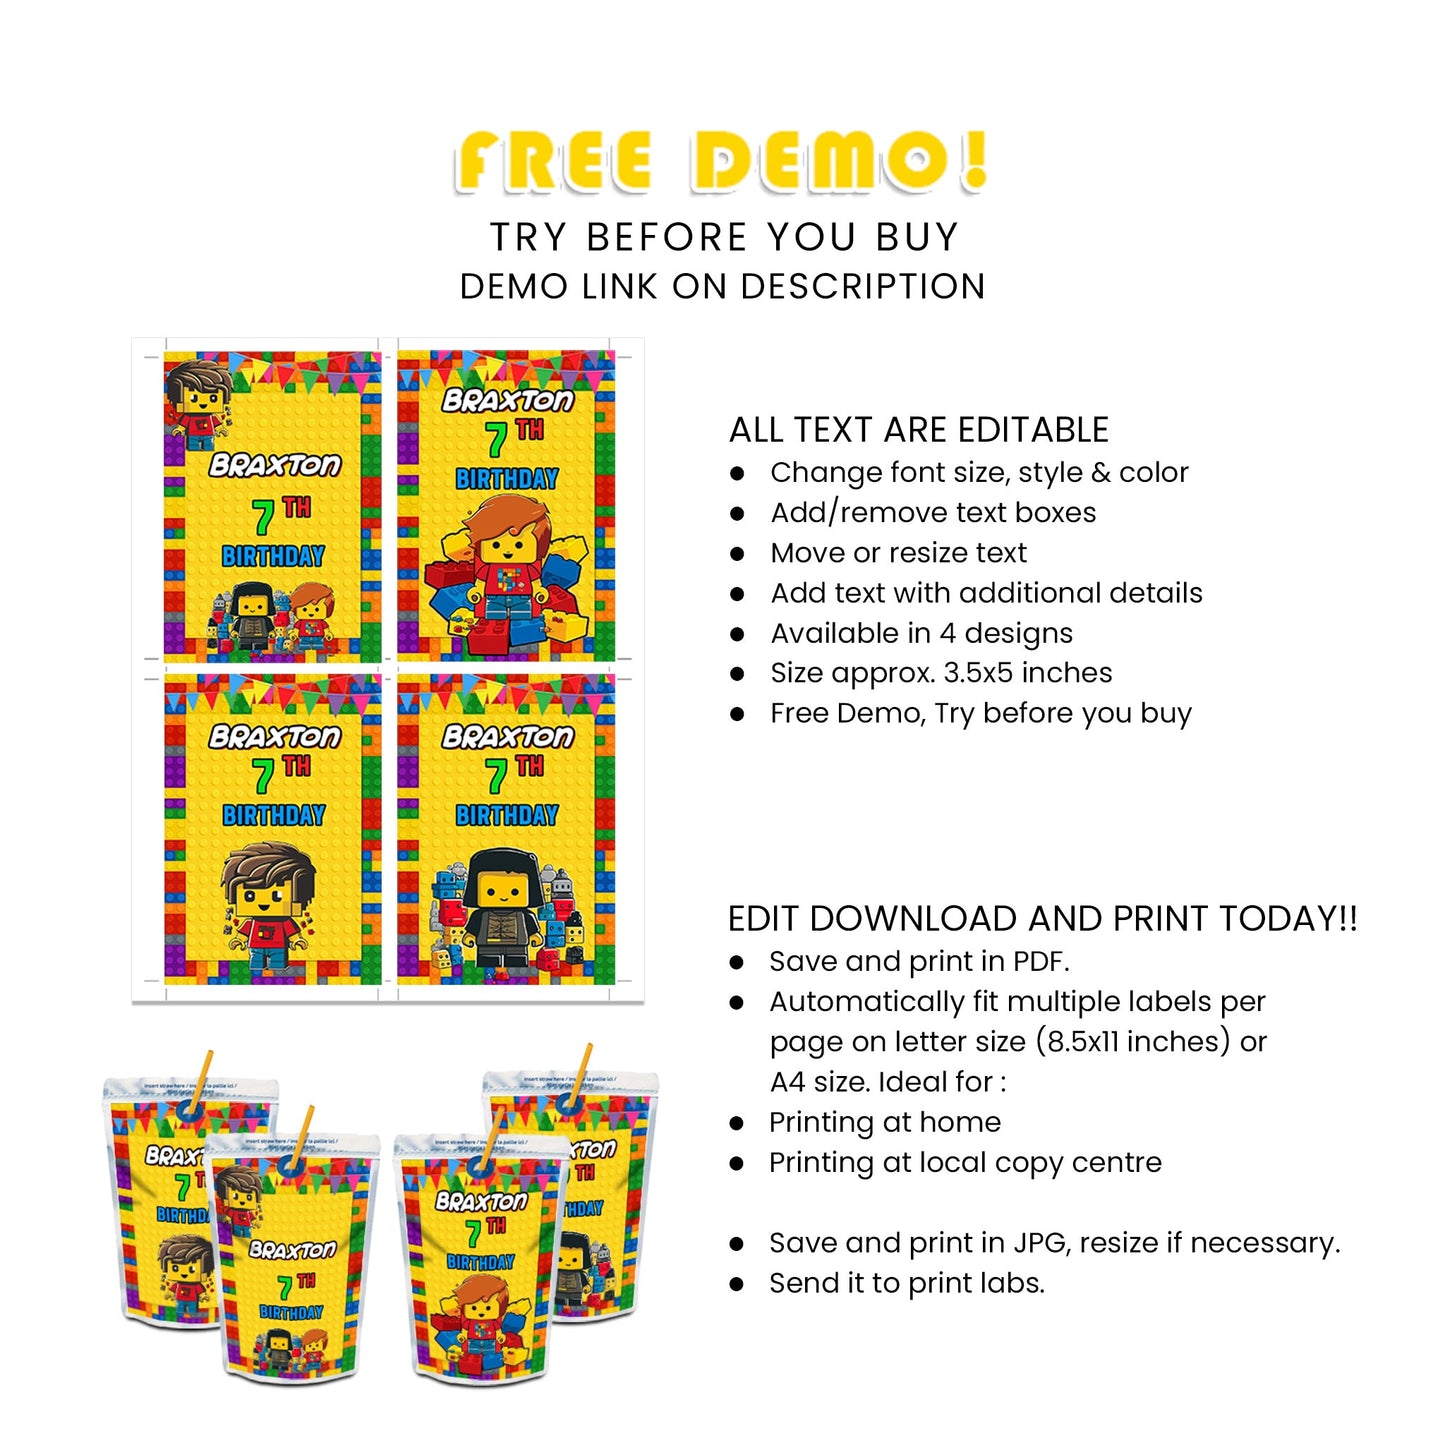 Caprisun Label/Juice Pouch Label with Lego Design - Refresh Your Party